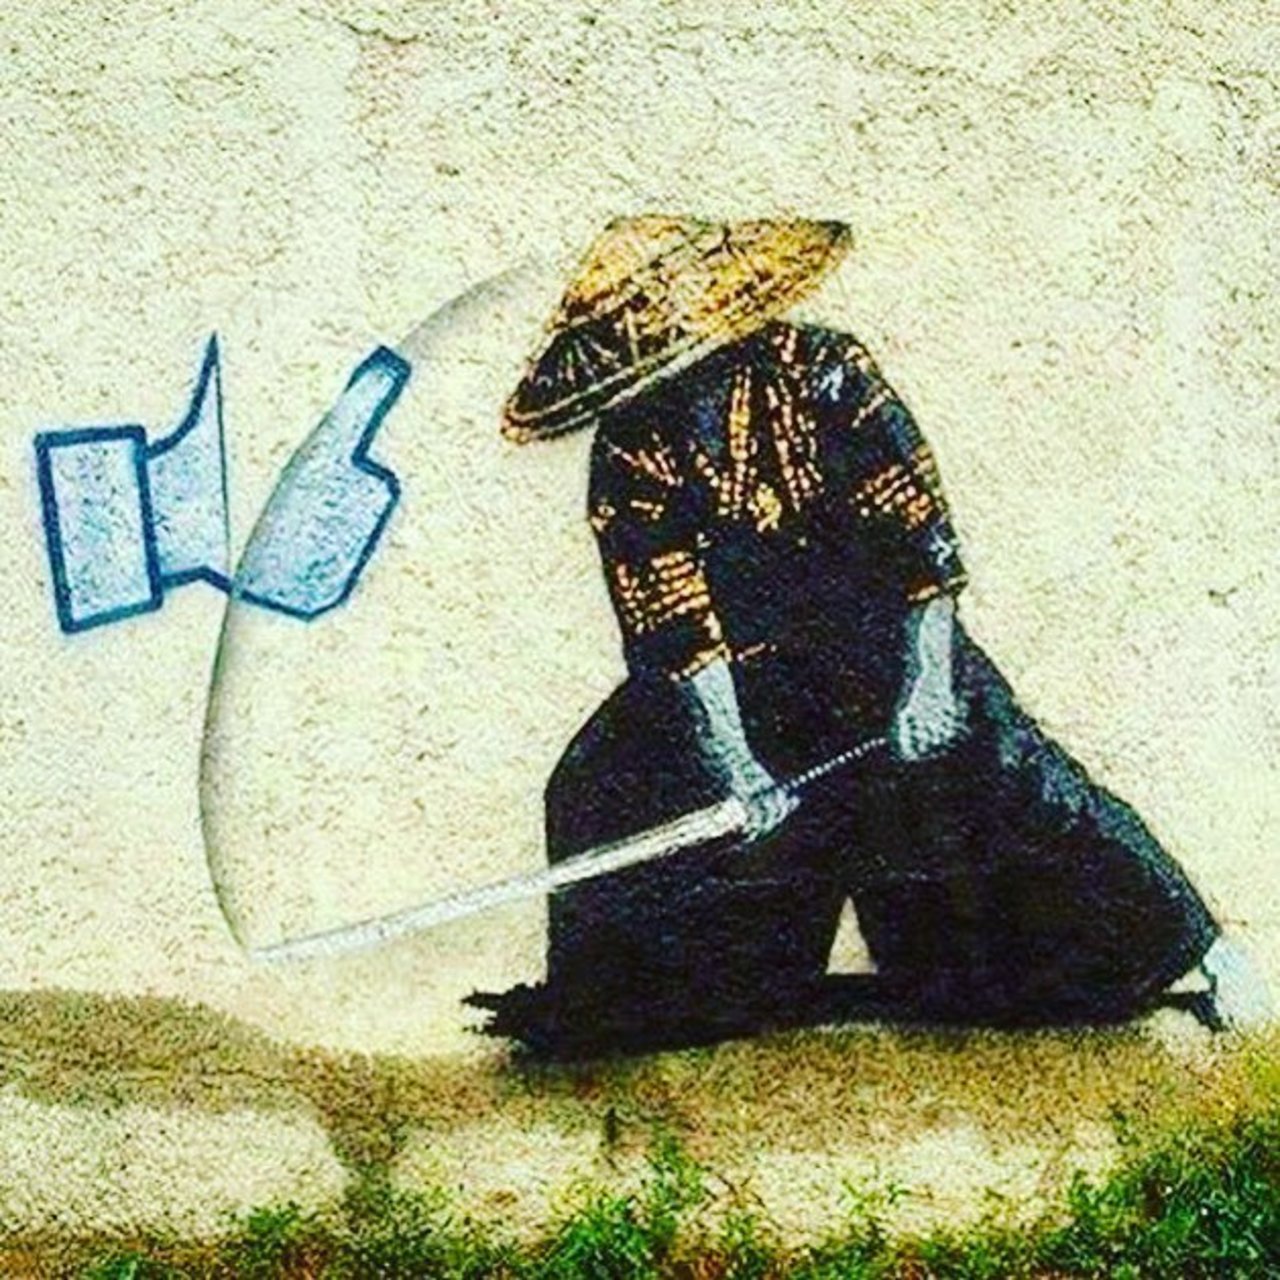 Likes created by @artnafir #artnafir #streetart #art #MrHOLLYWOOD #graffiti #sprayart #Banksy #Artist #MrBrainwas… https://t.co/u6cZLYyuFW